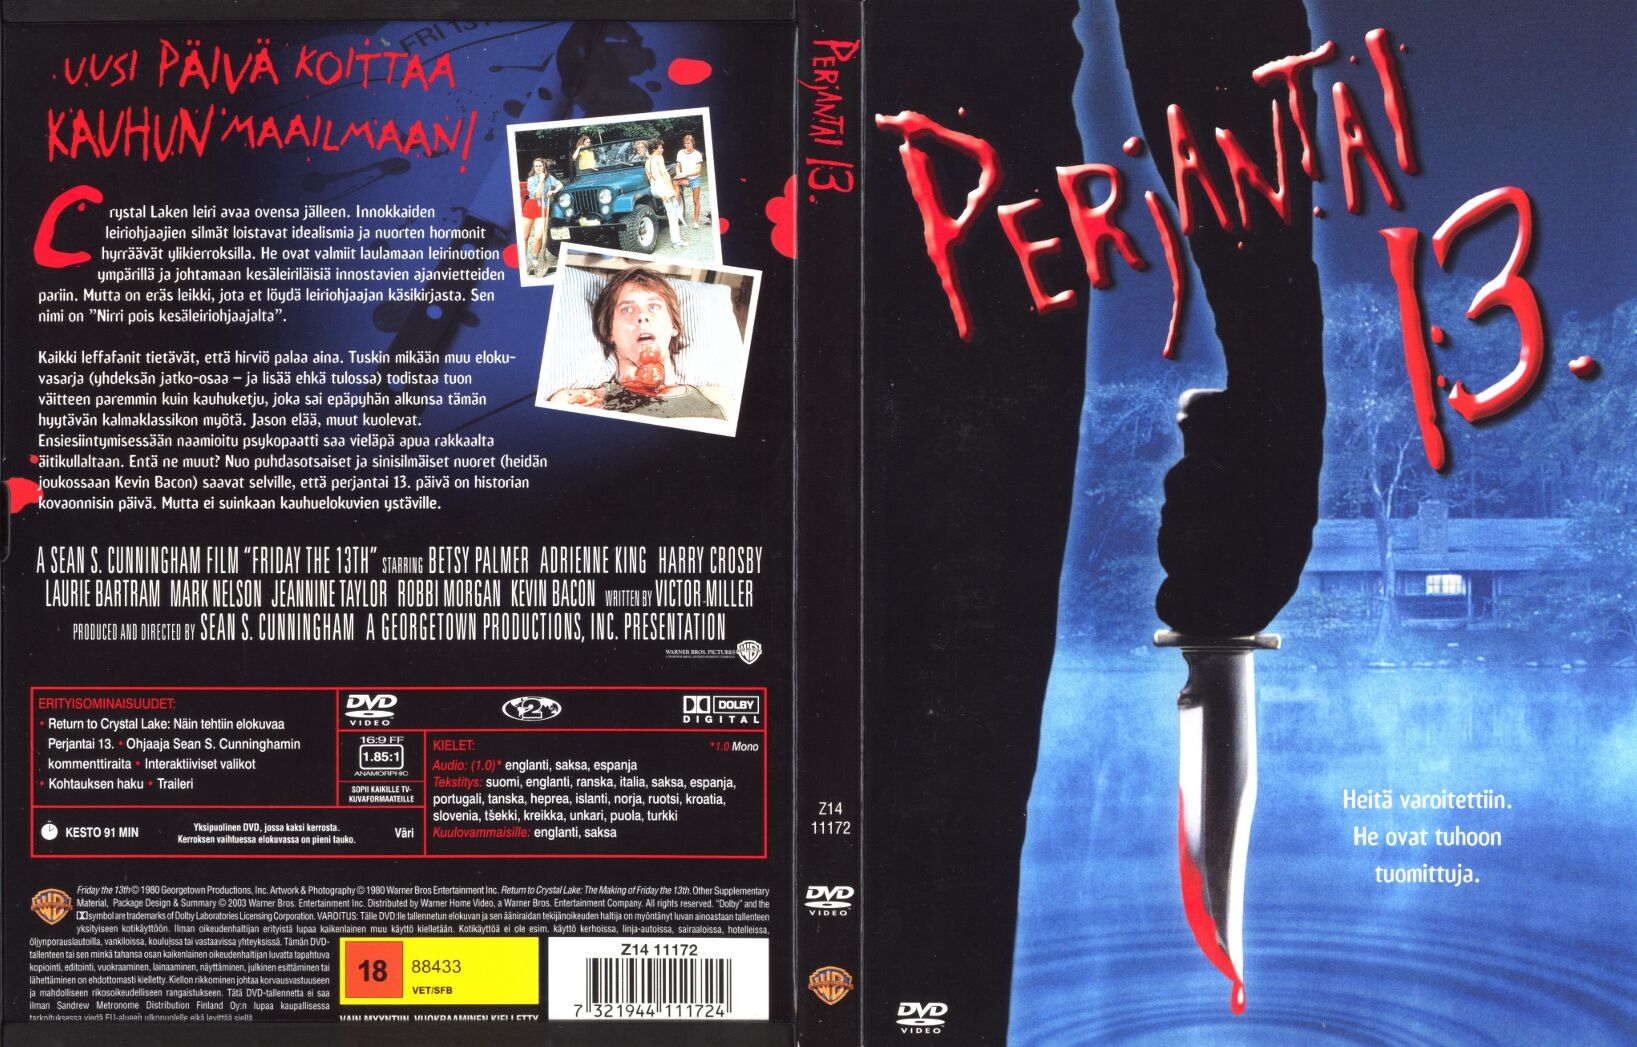 Friday the 13th (1980) Retrospective - Wicked Horror